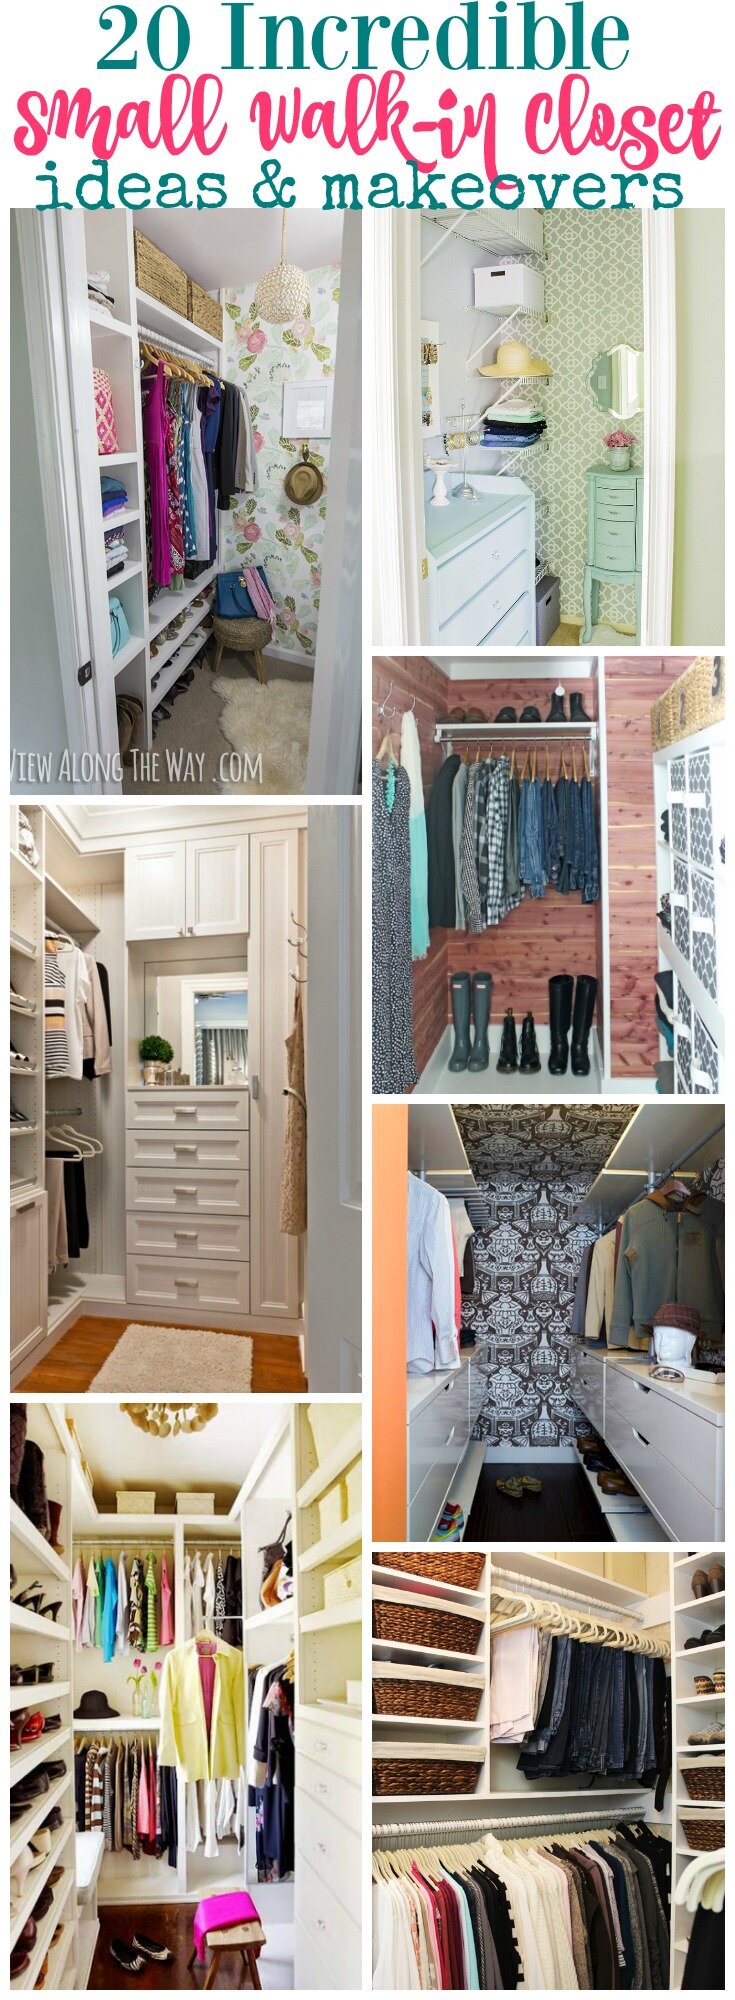 Diy Walk in Closet | Diy Custom Closet Ideas | How to Make Your Own Closet Organizer